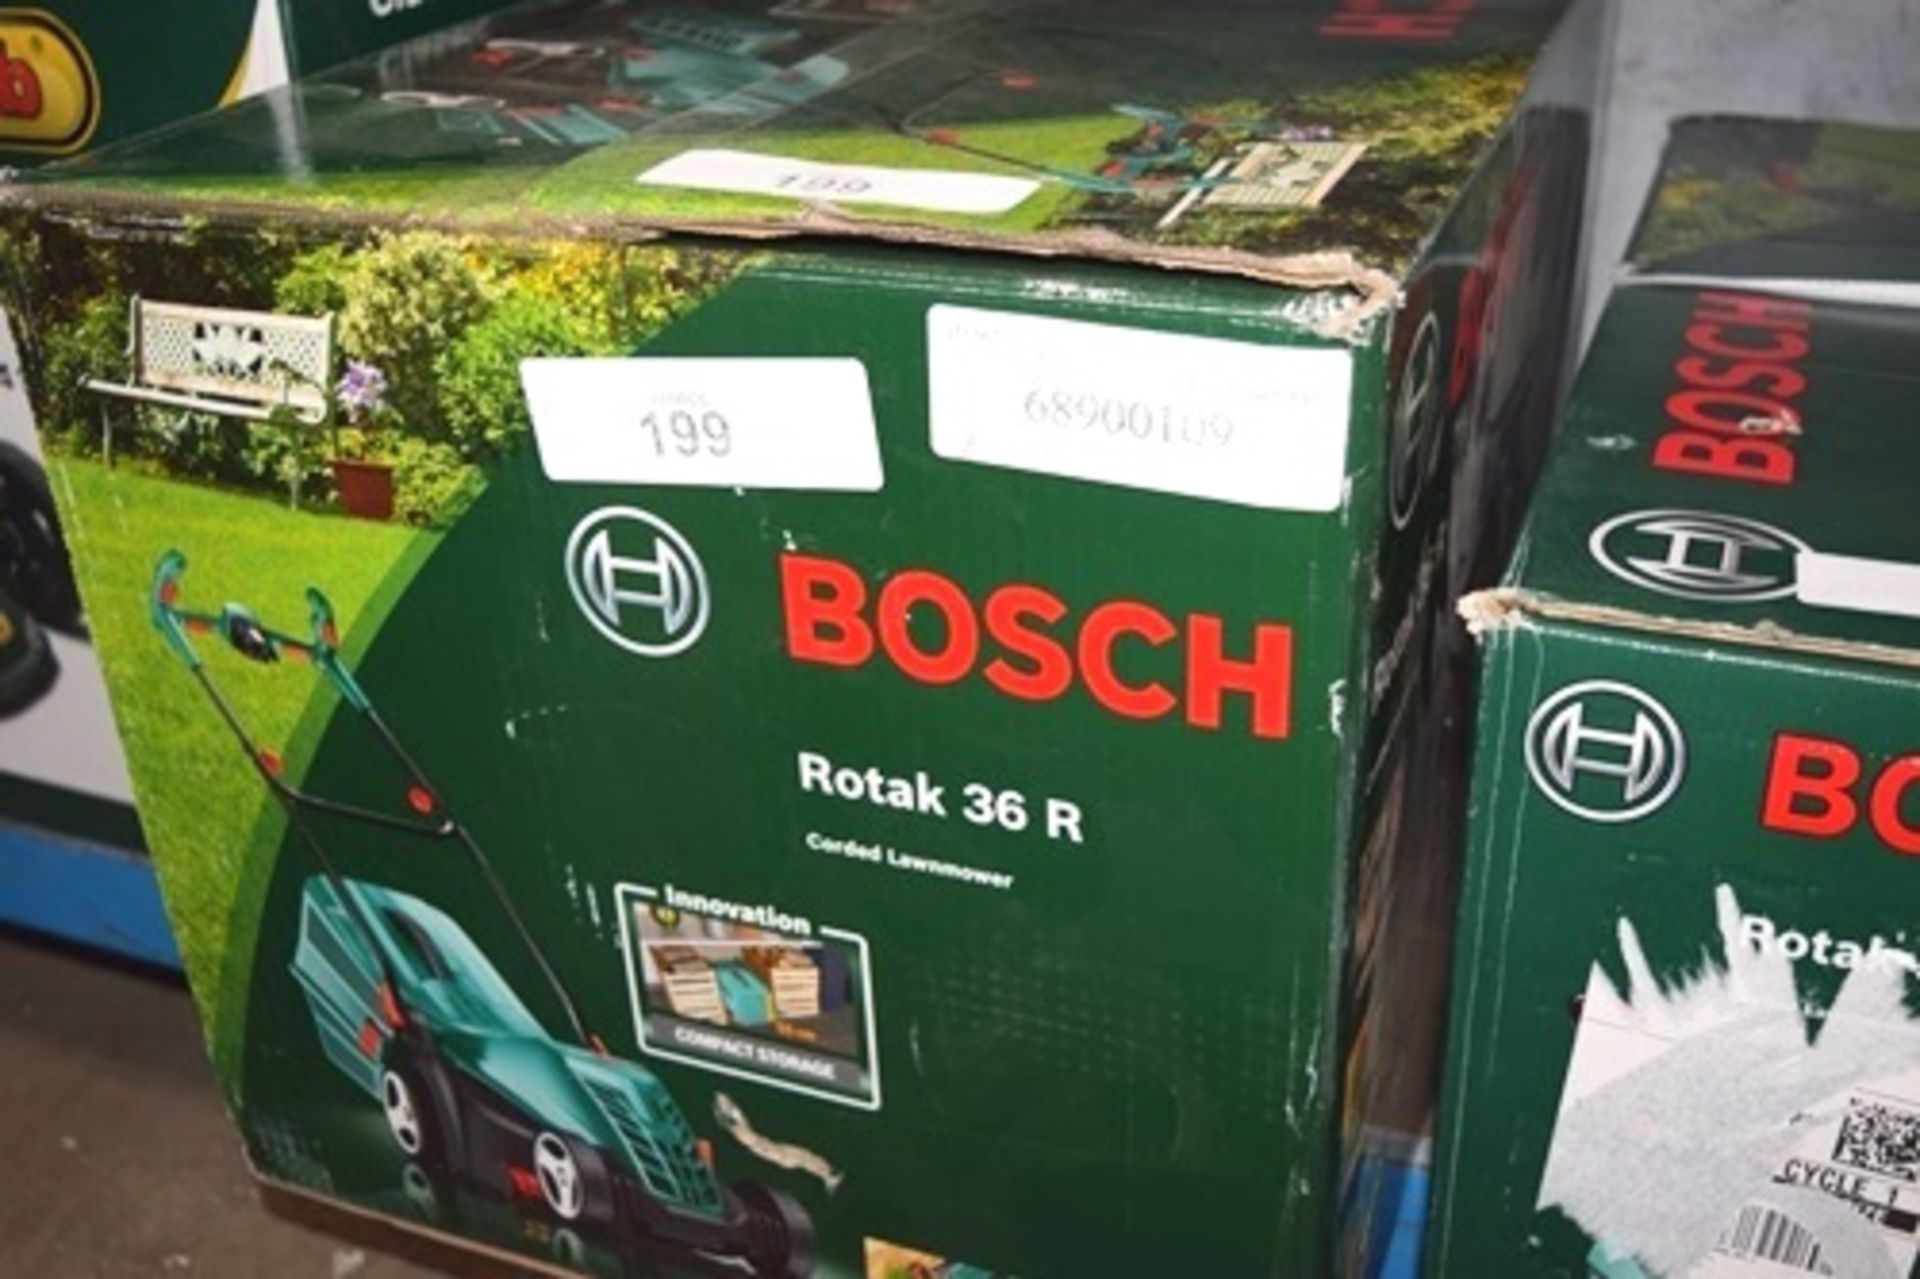 Bosch Rotak 36R electric lawnmower - New in box (GS30)